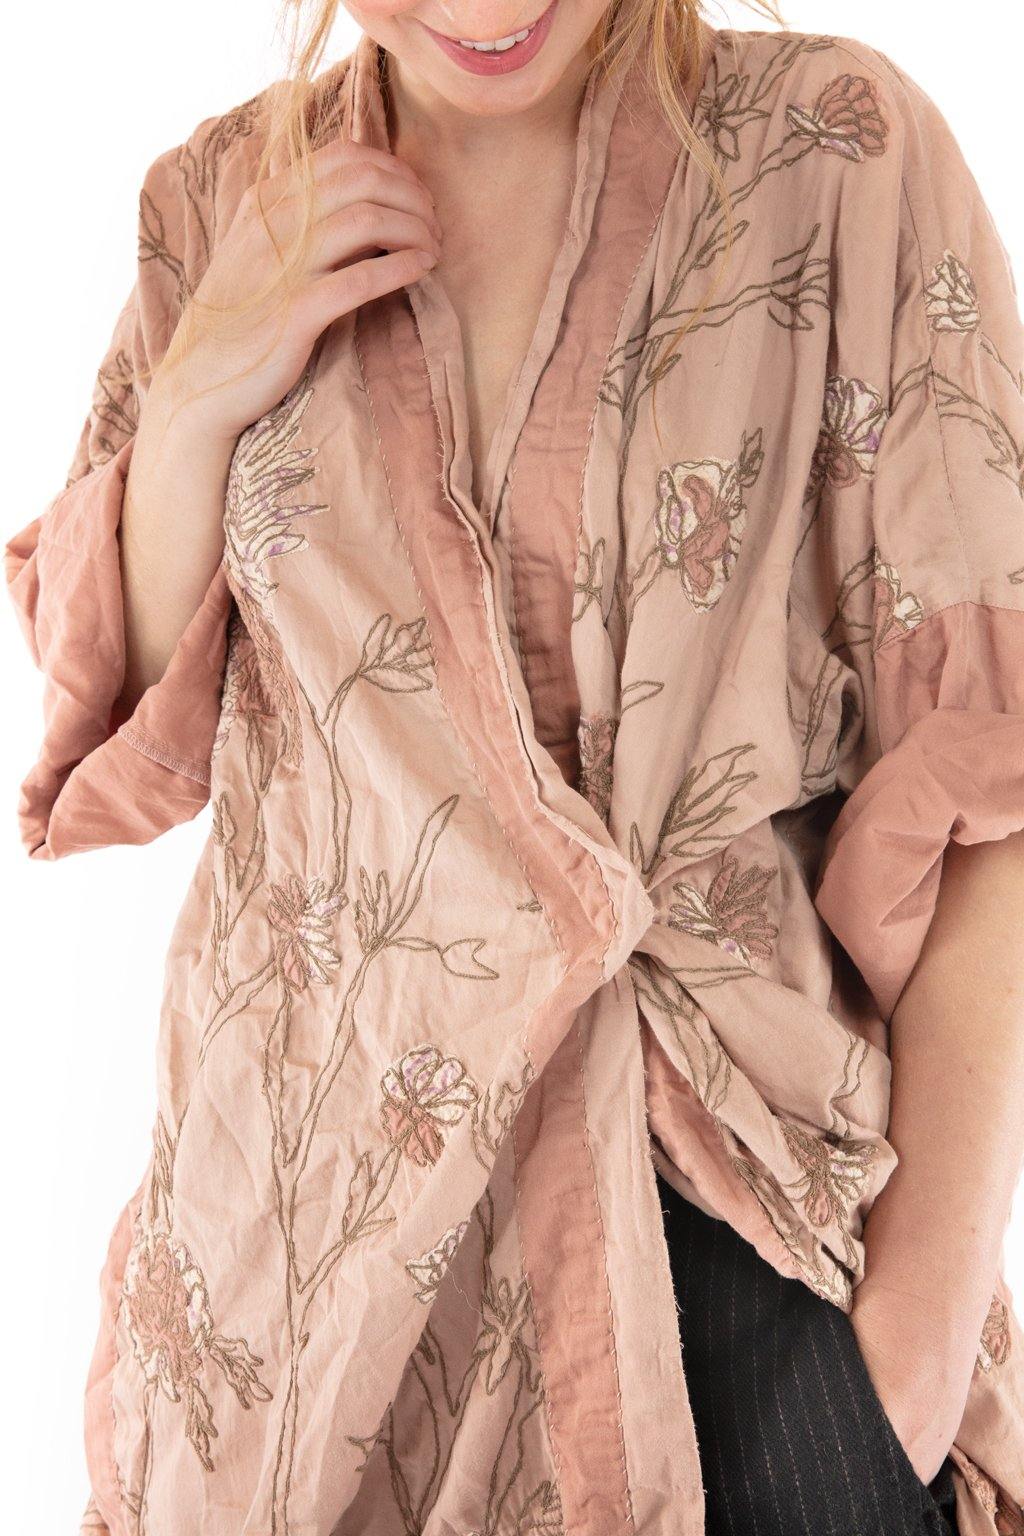 Lilikoi Kimono - Magnolia Pearl Clothing